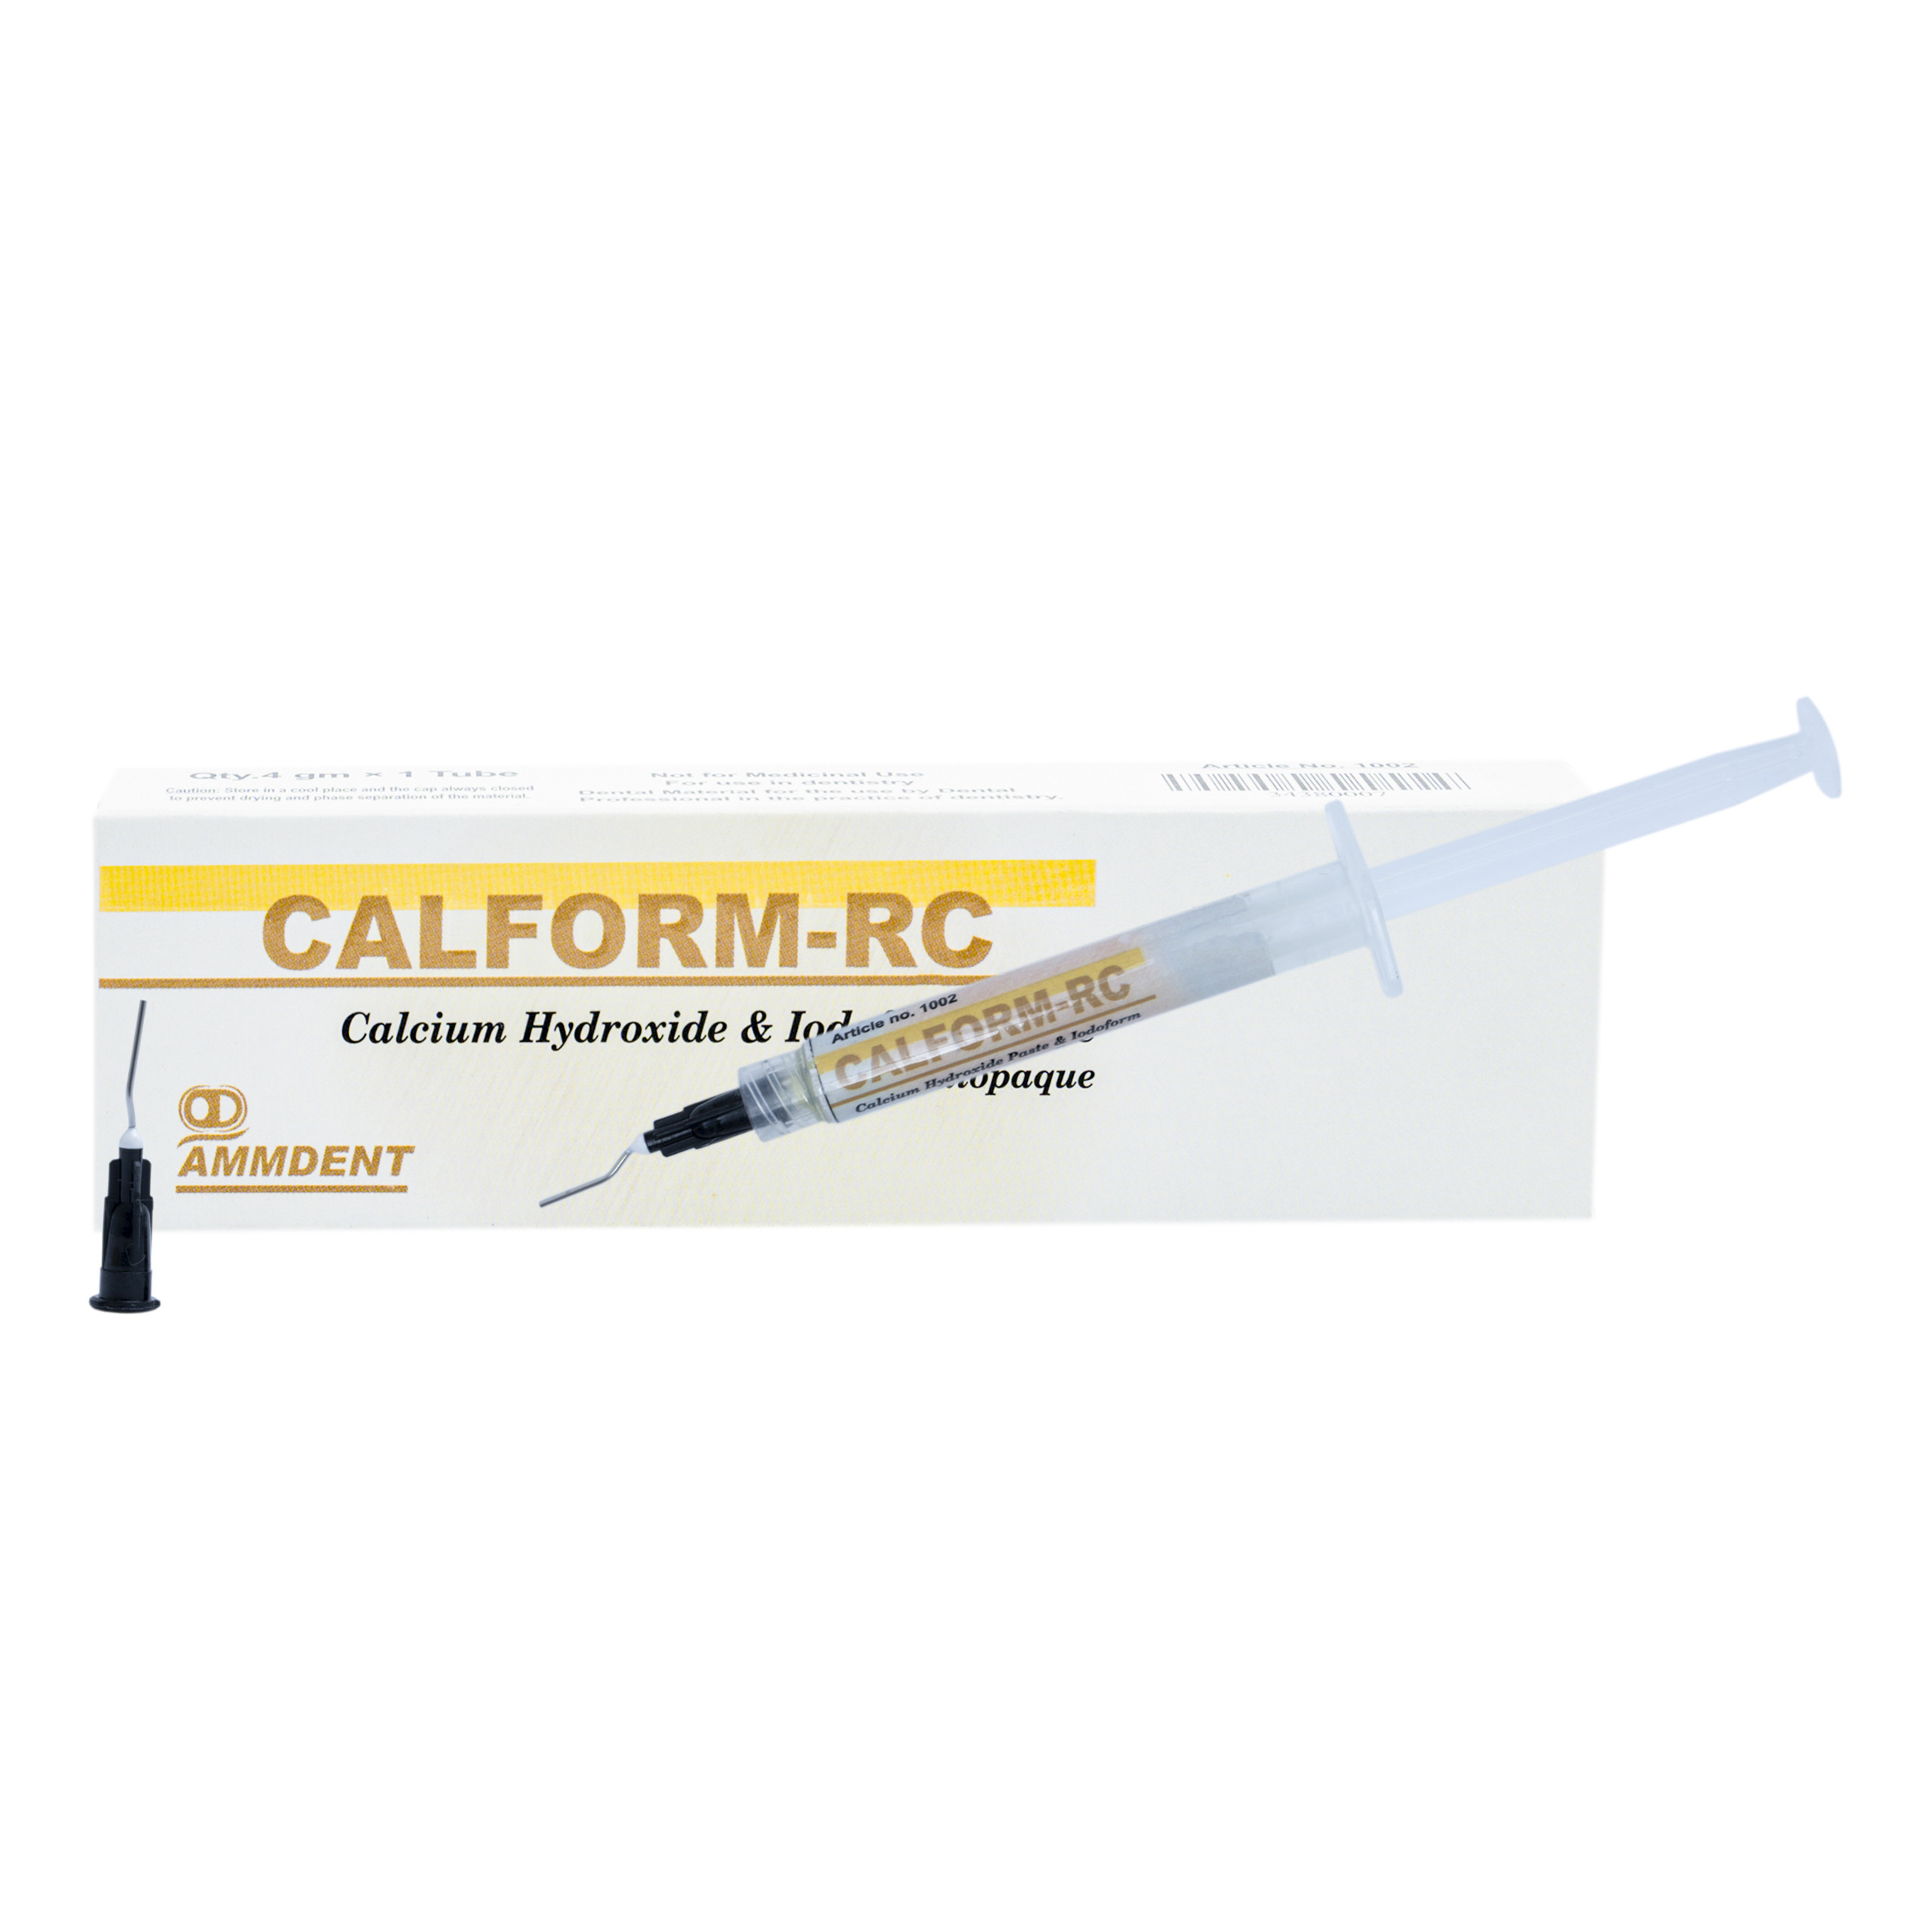 Ammdent CalForm Rc Calcium Hydroxide Paste With Iodoform Radiopaque